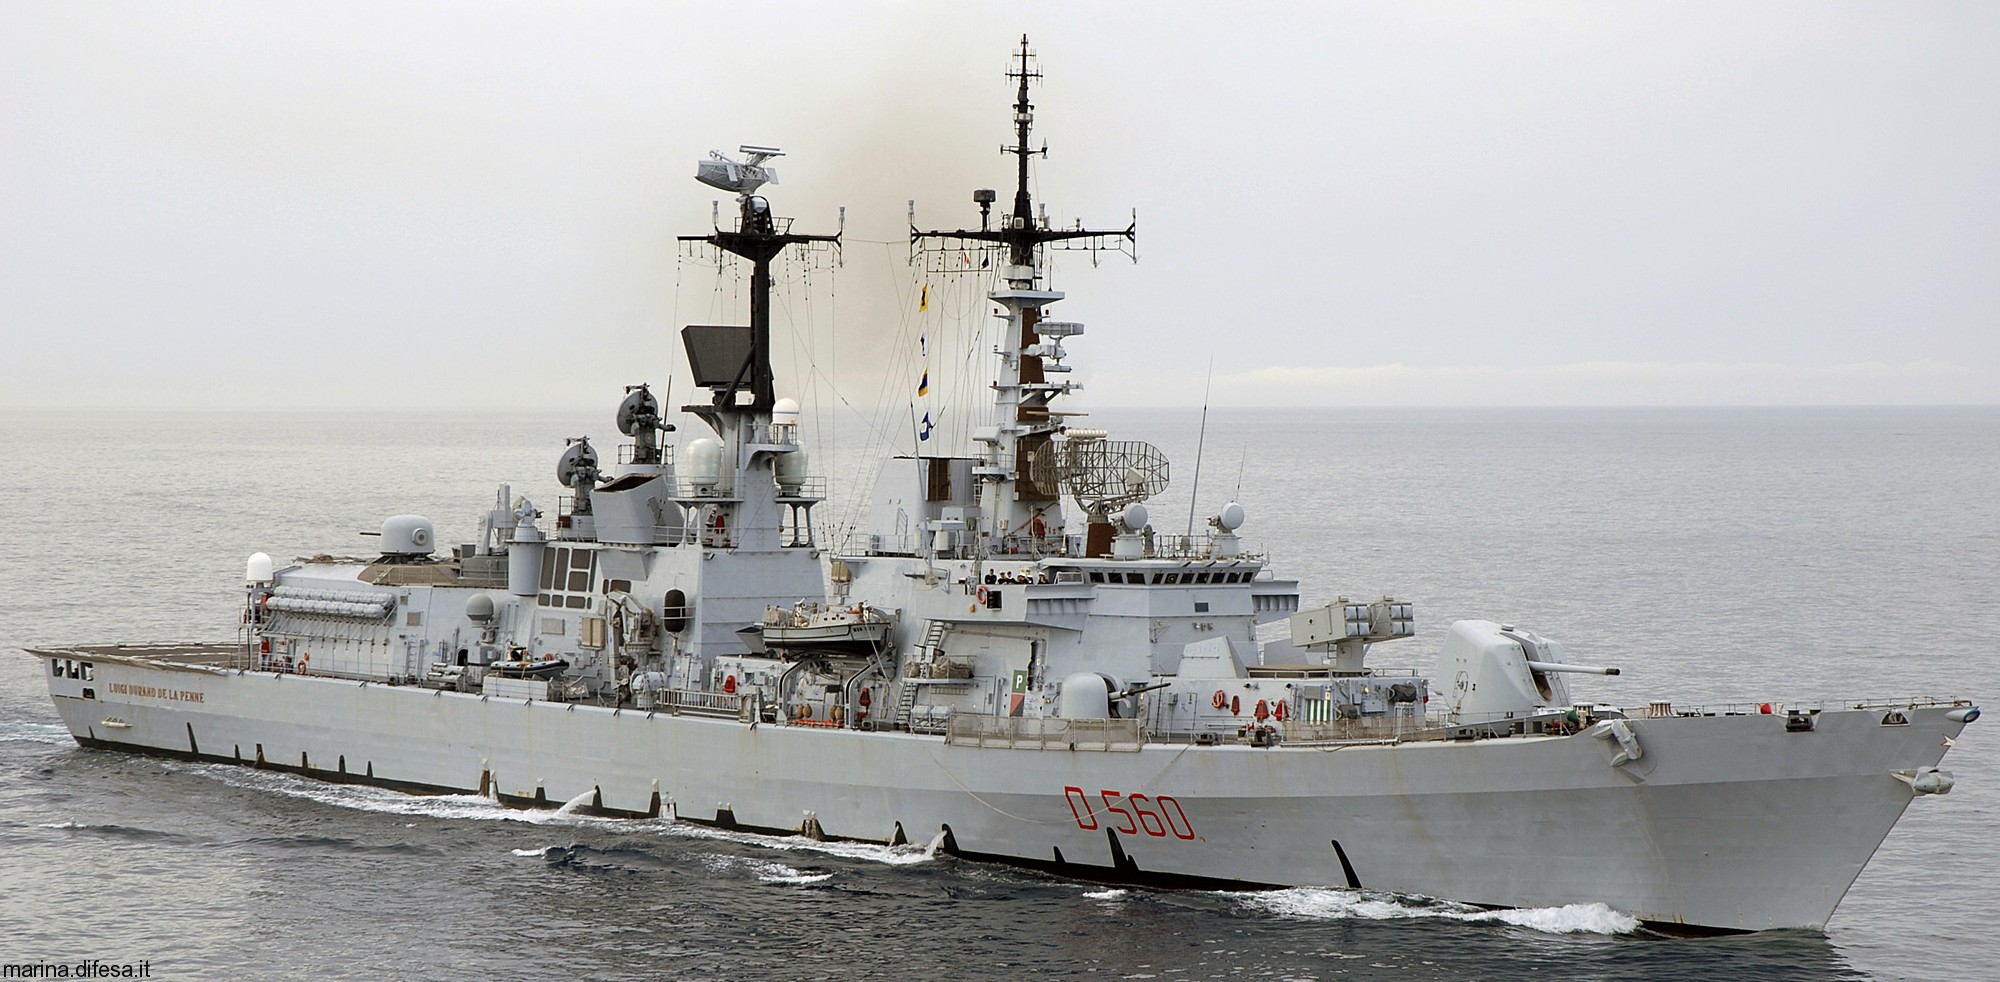 d-560 luigi durand de la penne its nave guided missile destroyer italian navy 48c